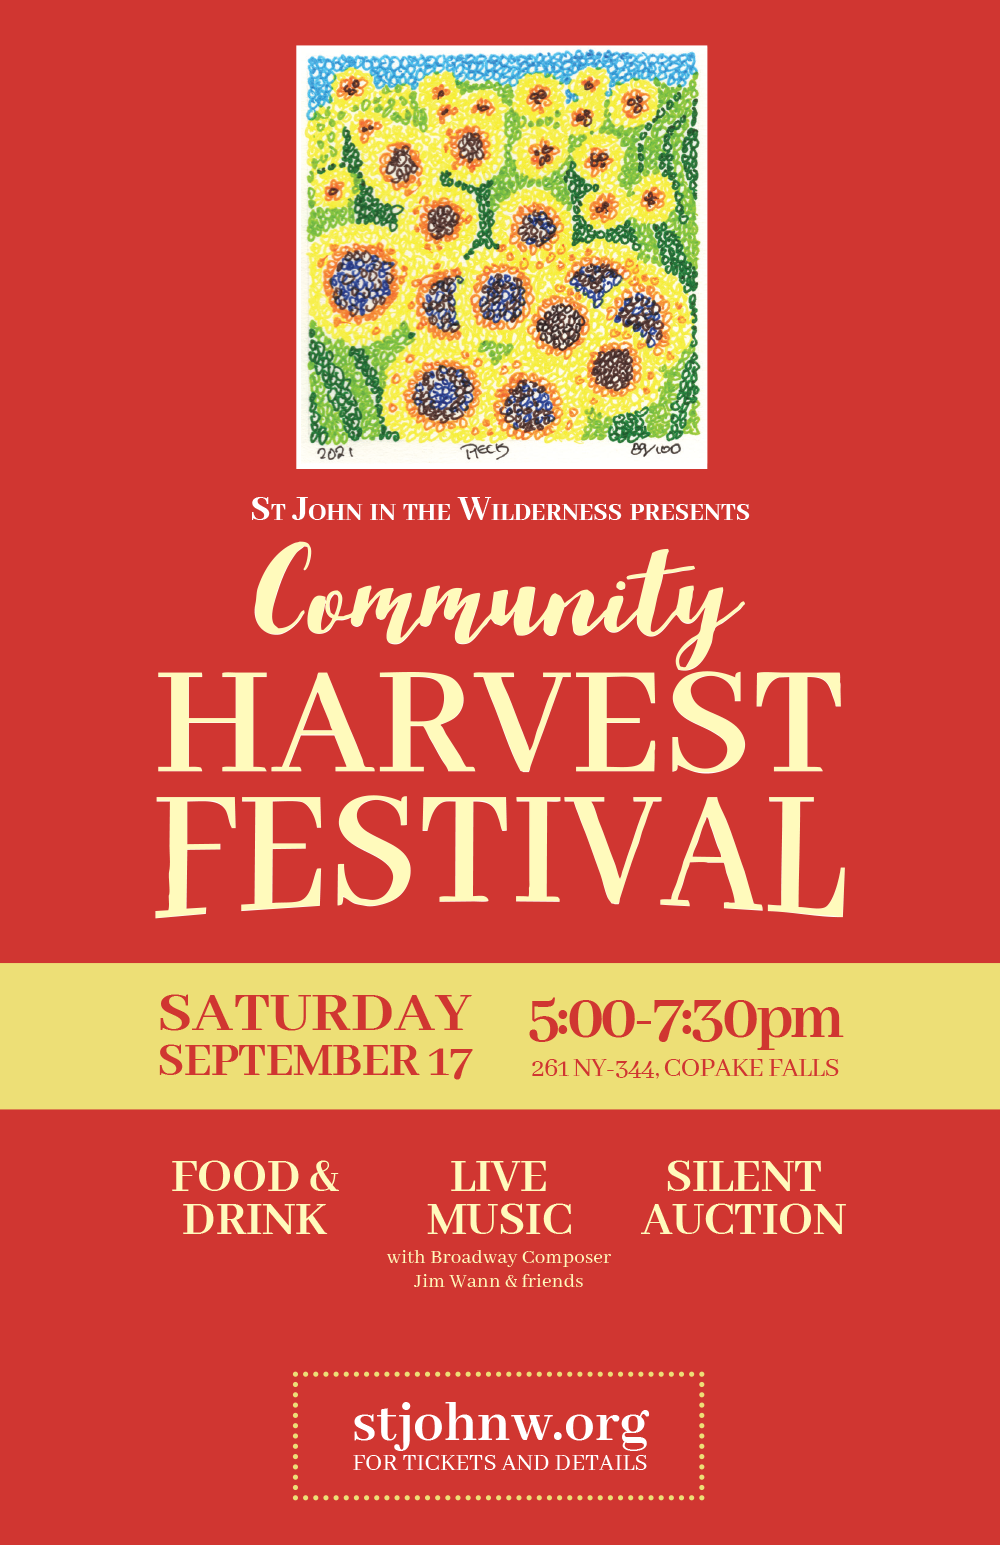 St John in the Wilderness presents Community Harvest Festival Saturday, September 17, 5:00-7:30pm. 261 NY 344 Copake Falls.